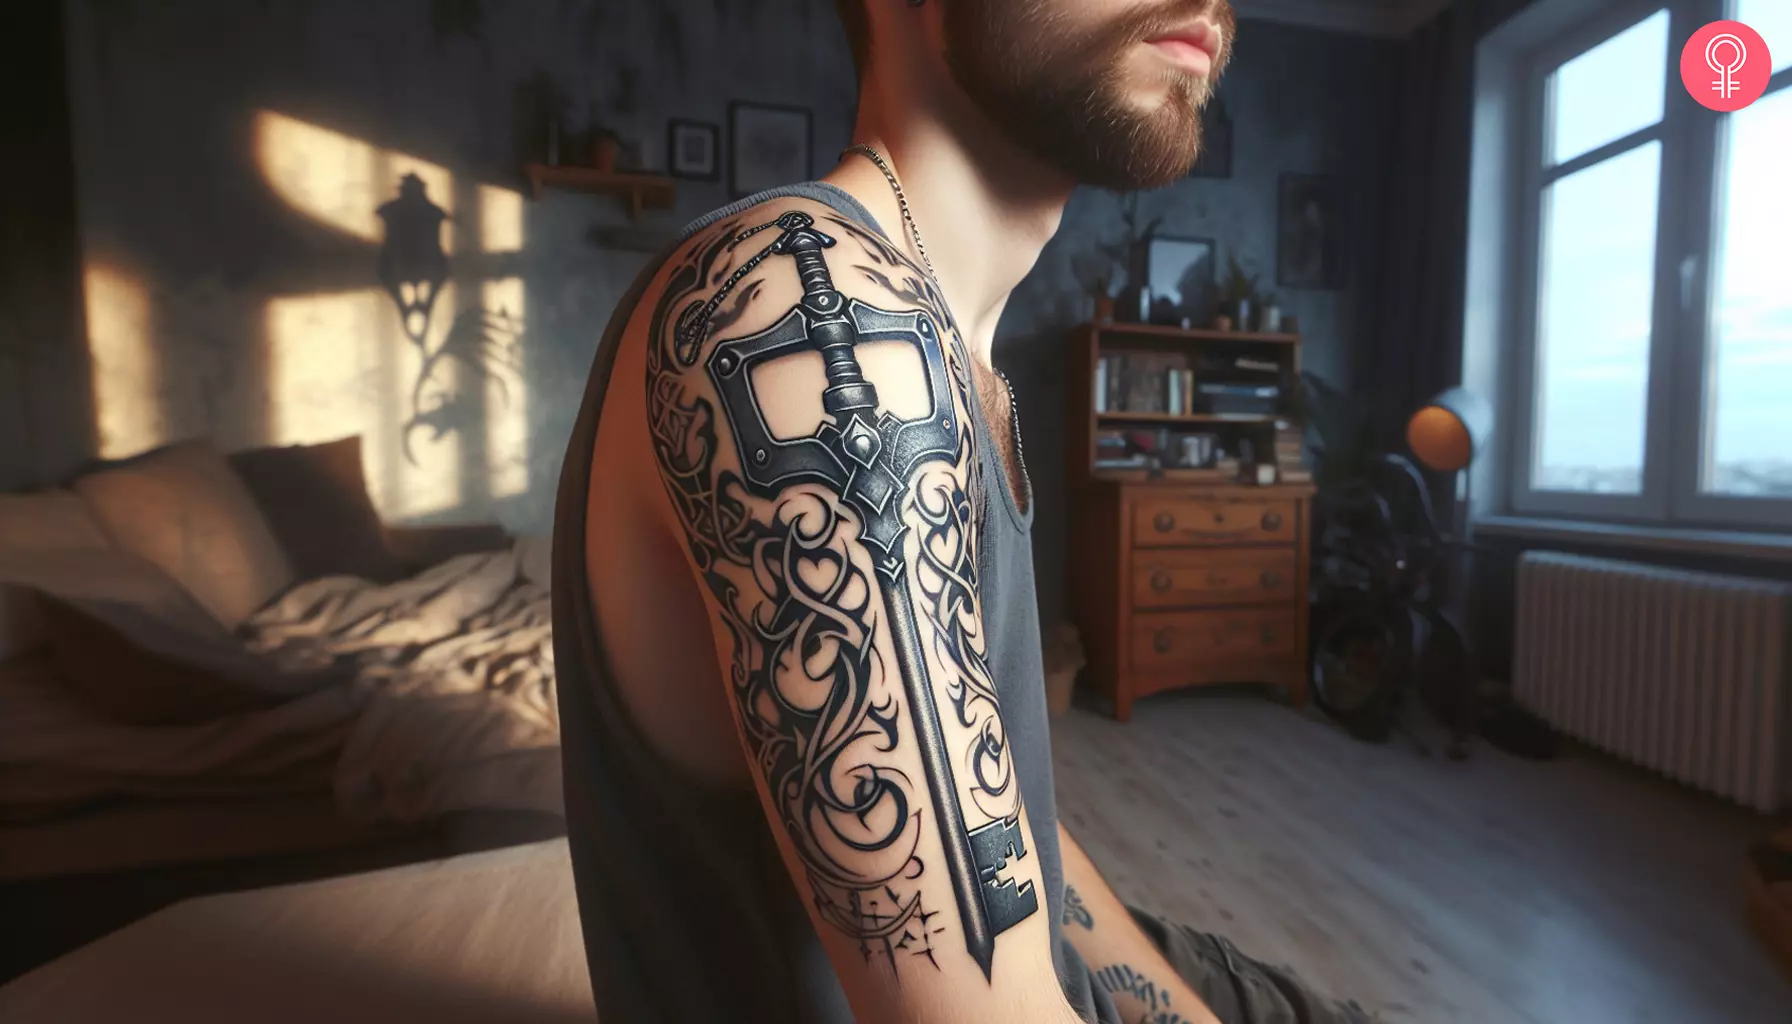 Kingdom hearts keyblade tattoo on the upper arm